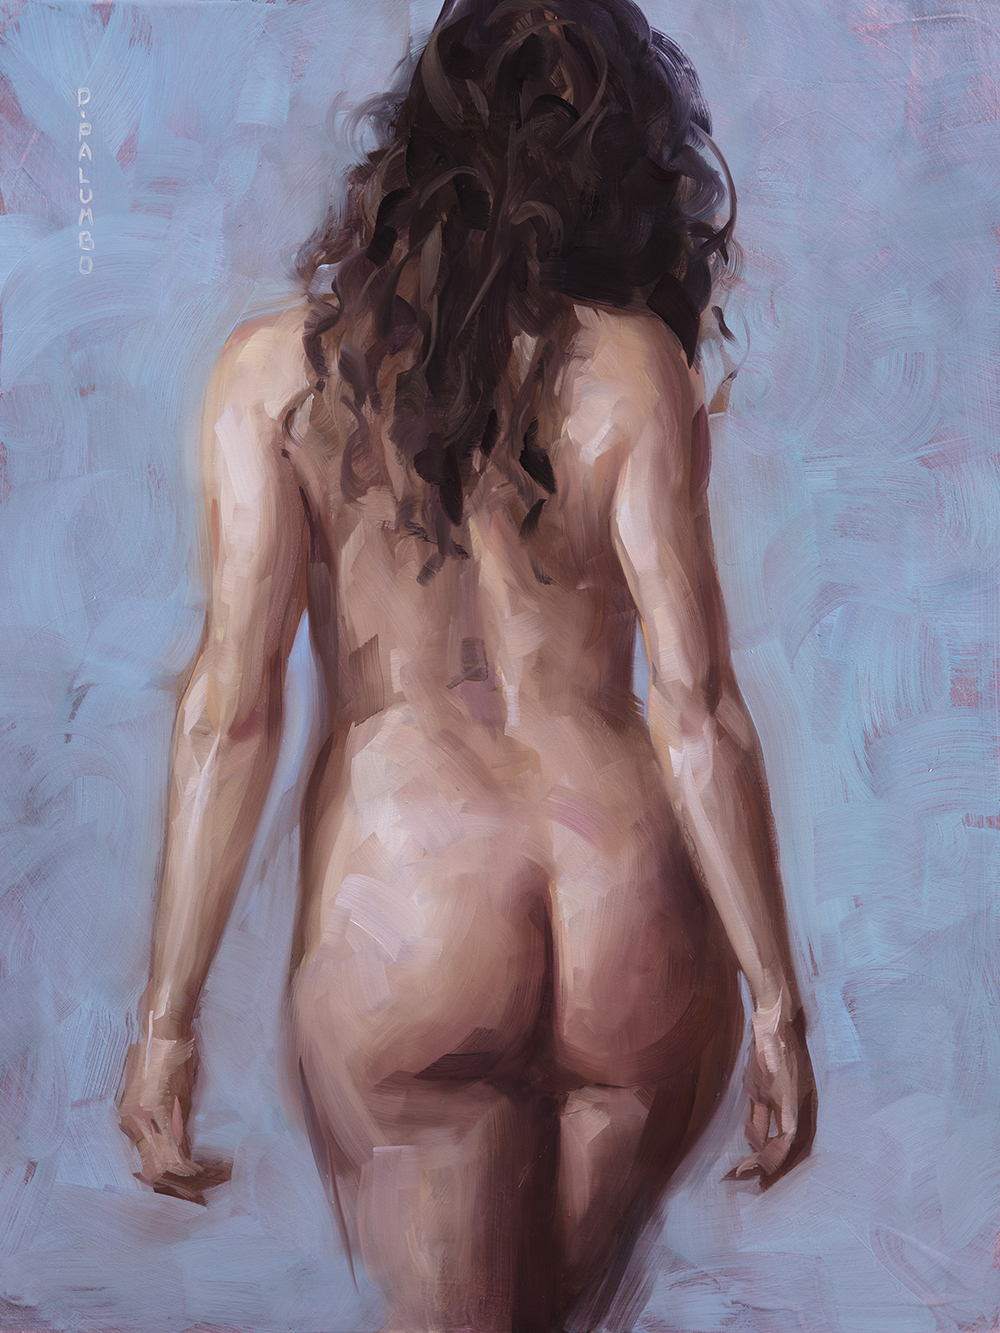 Nude Woman from Behind - Palumbo David